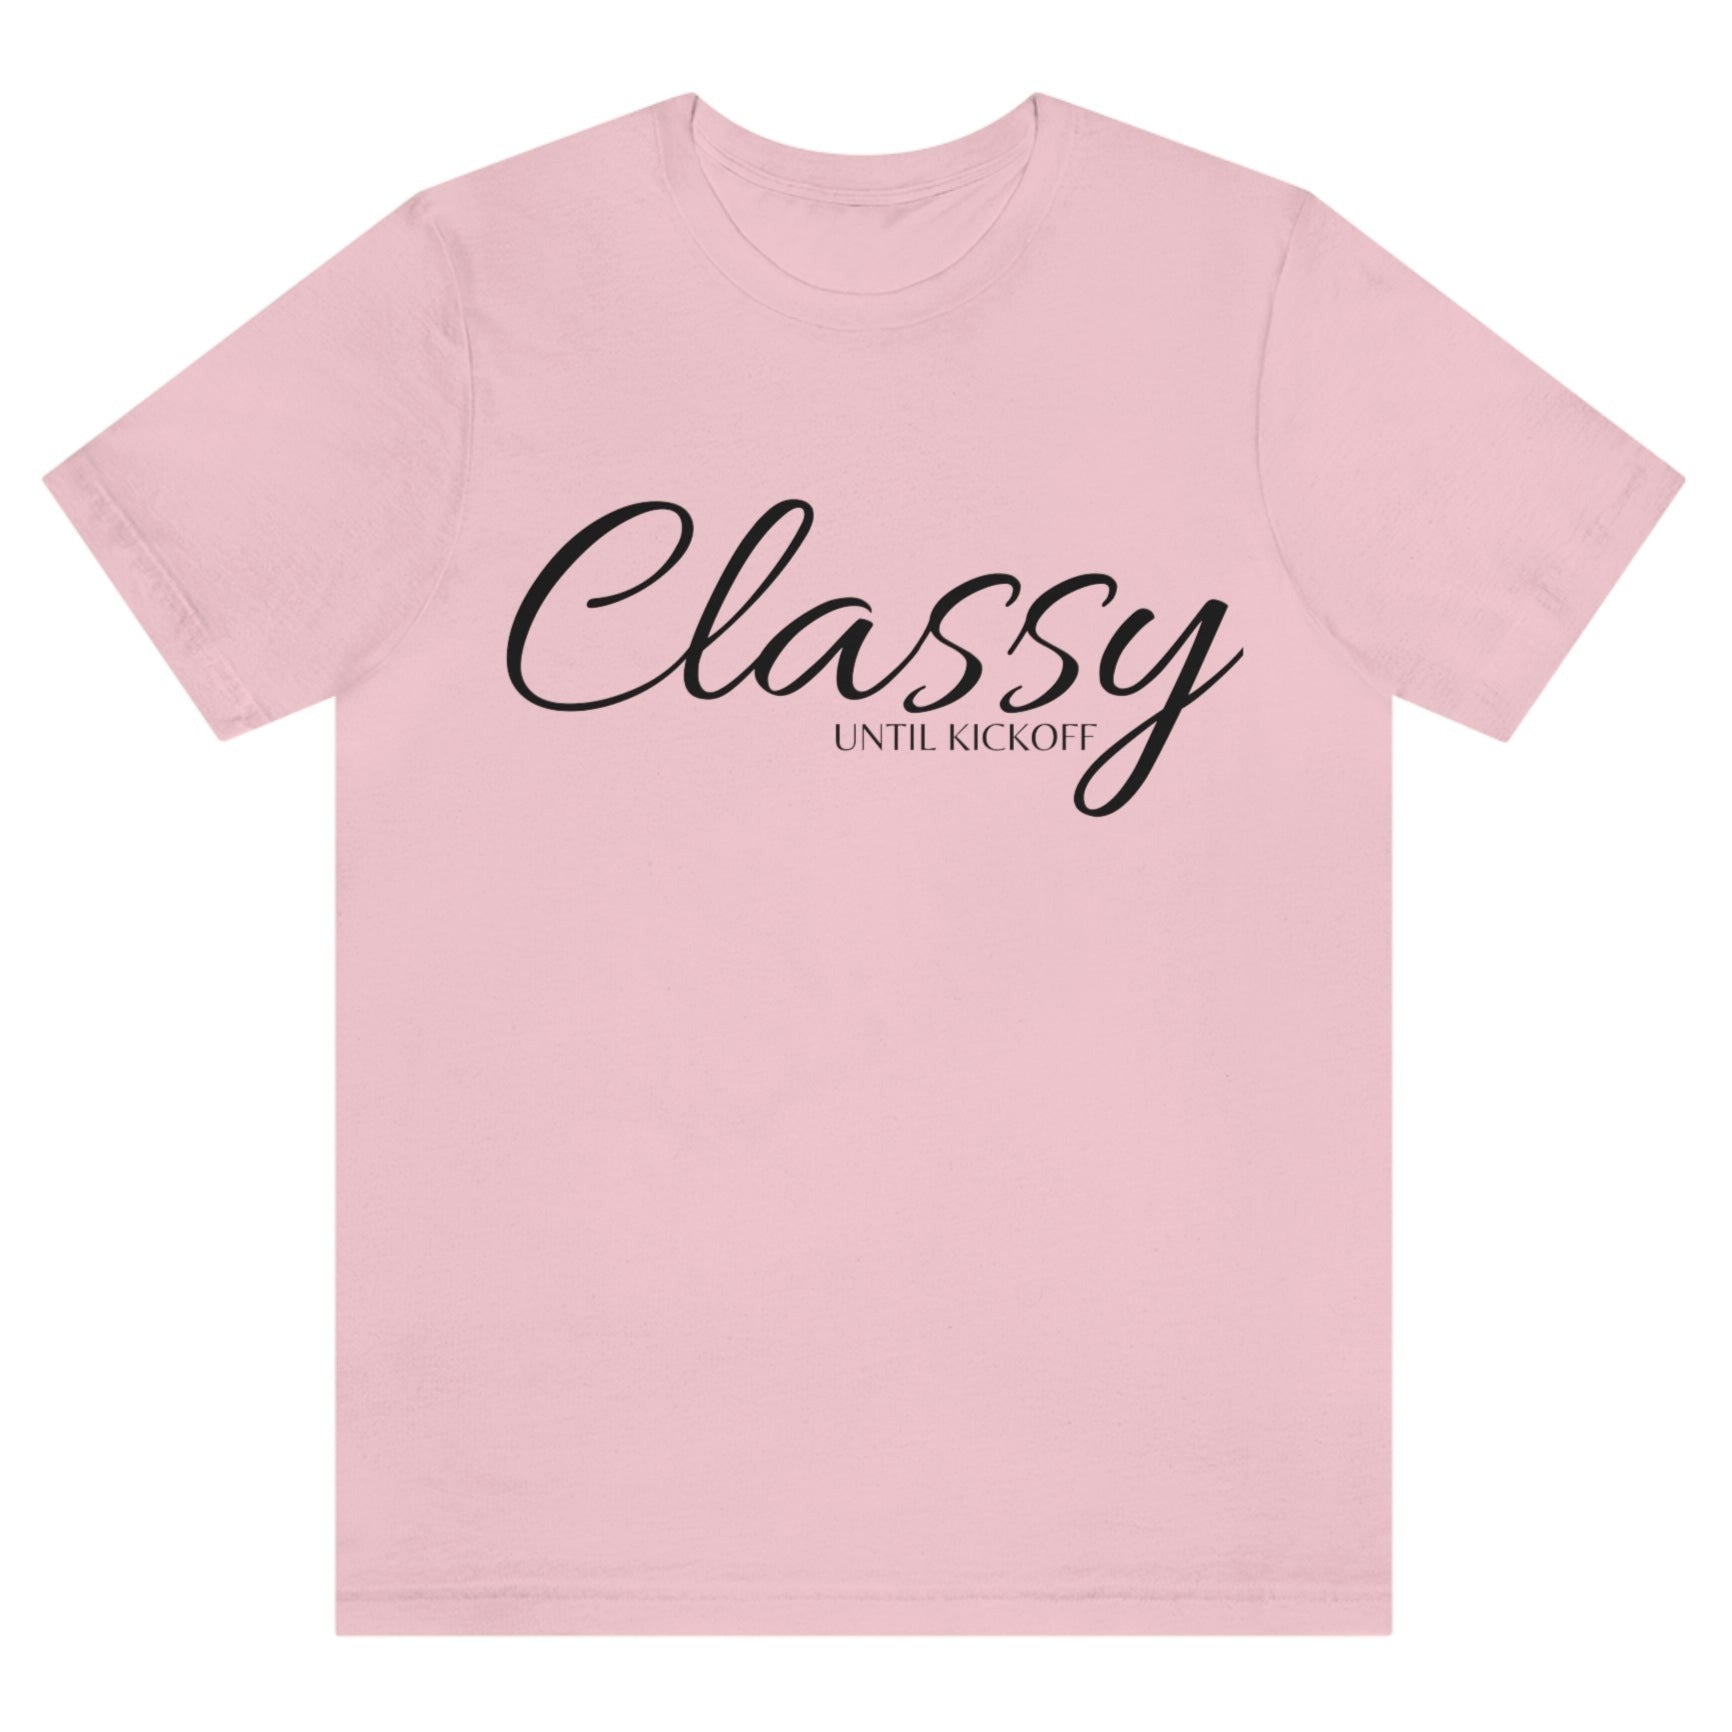 classy-until-kickoff-pink-t-shirt-football-soccer-womens